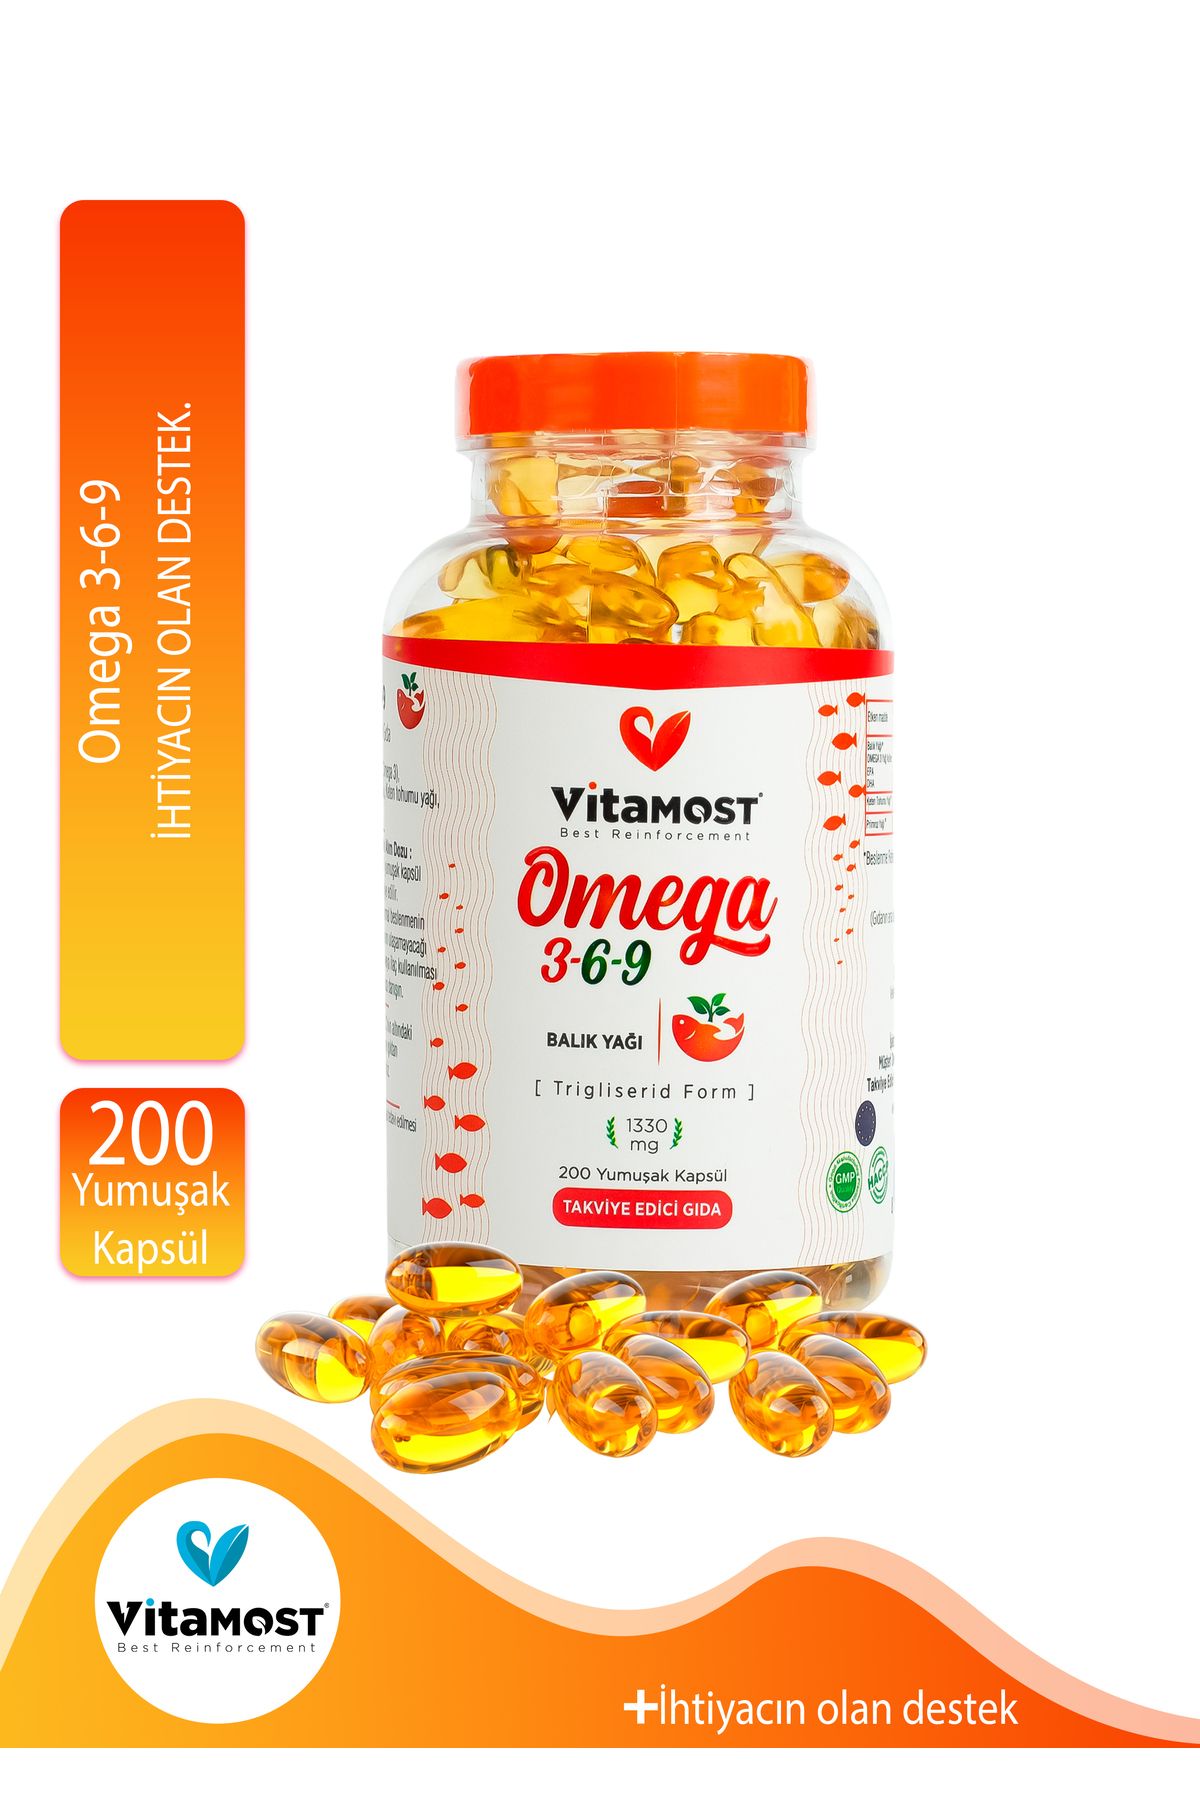 Vitamost Omega 369 200 Kapsül 1330 Mg (omega3, Fish Oil, Balık Yağı )